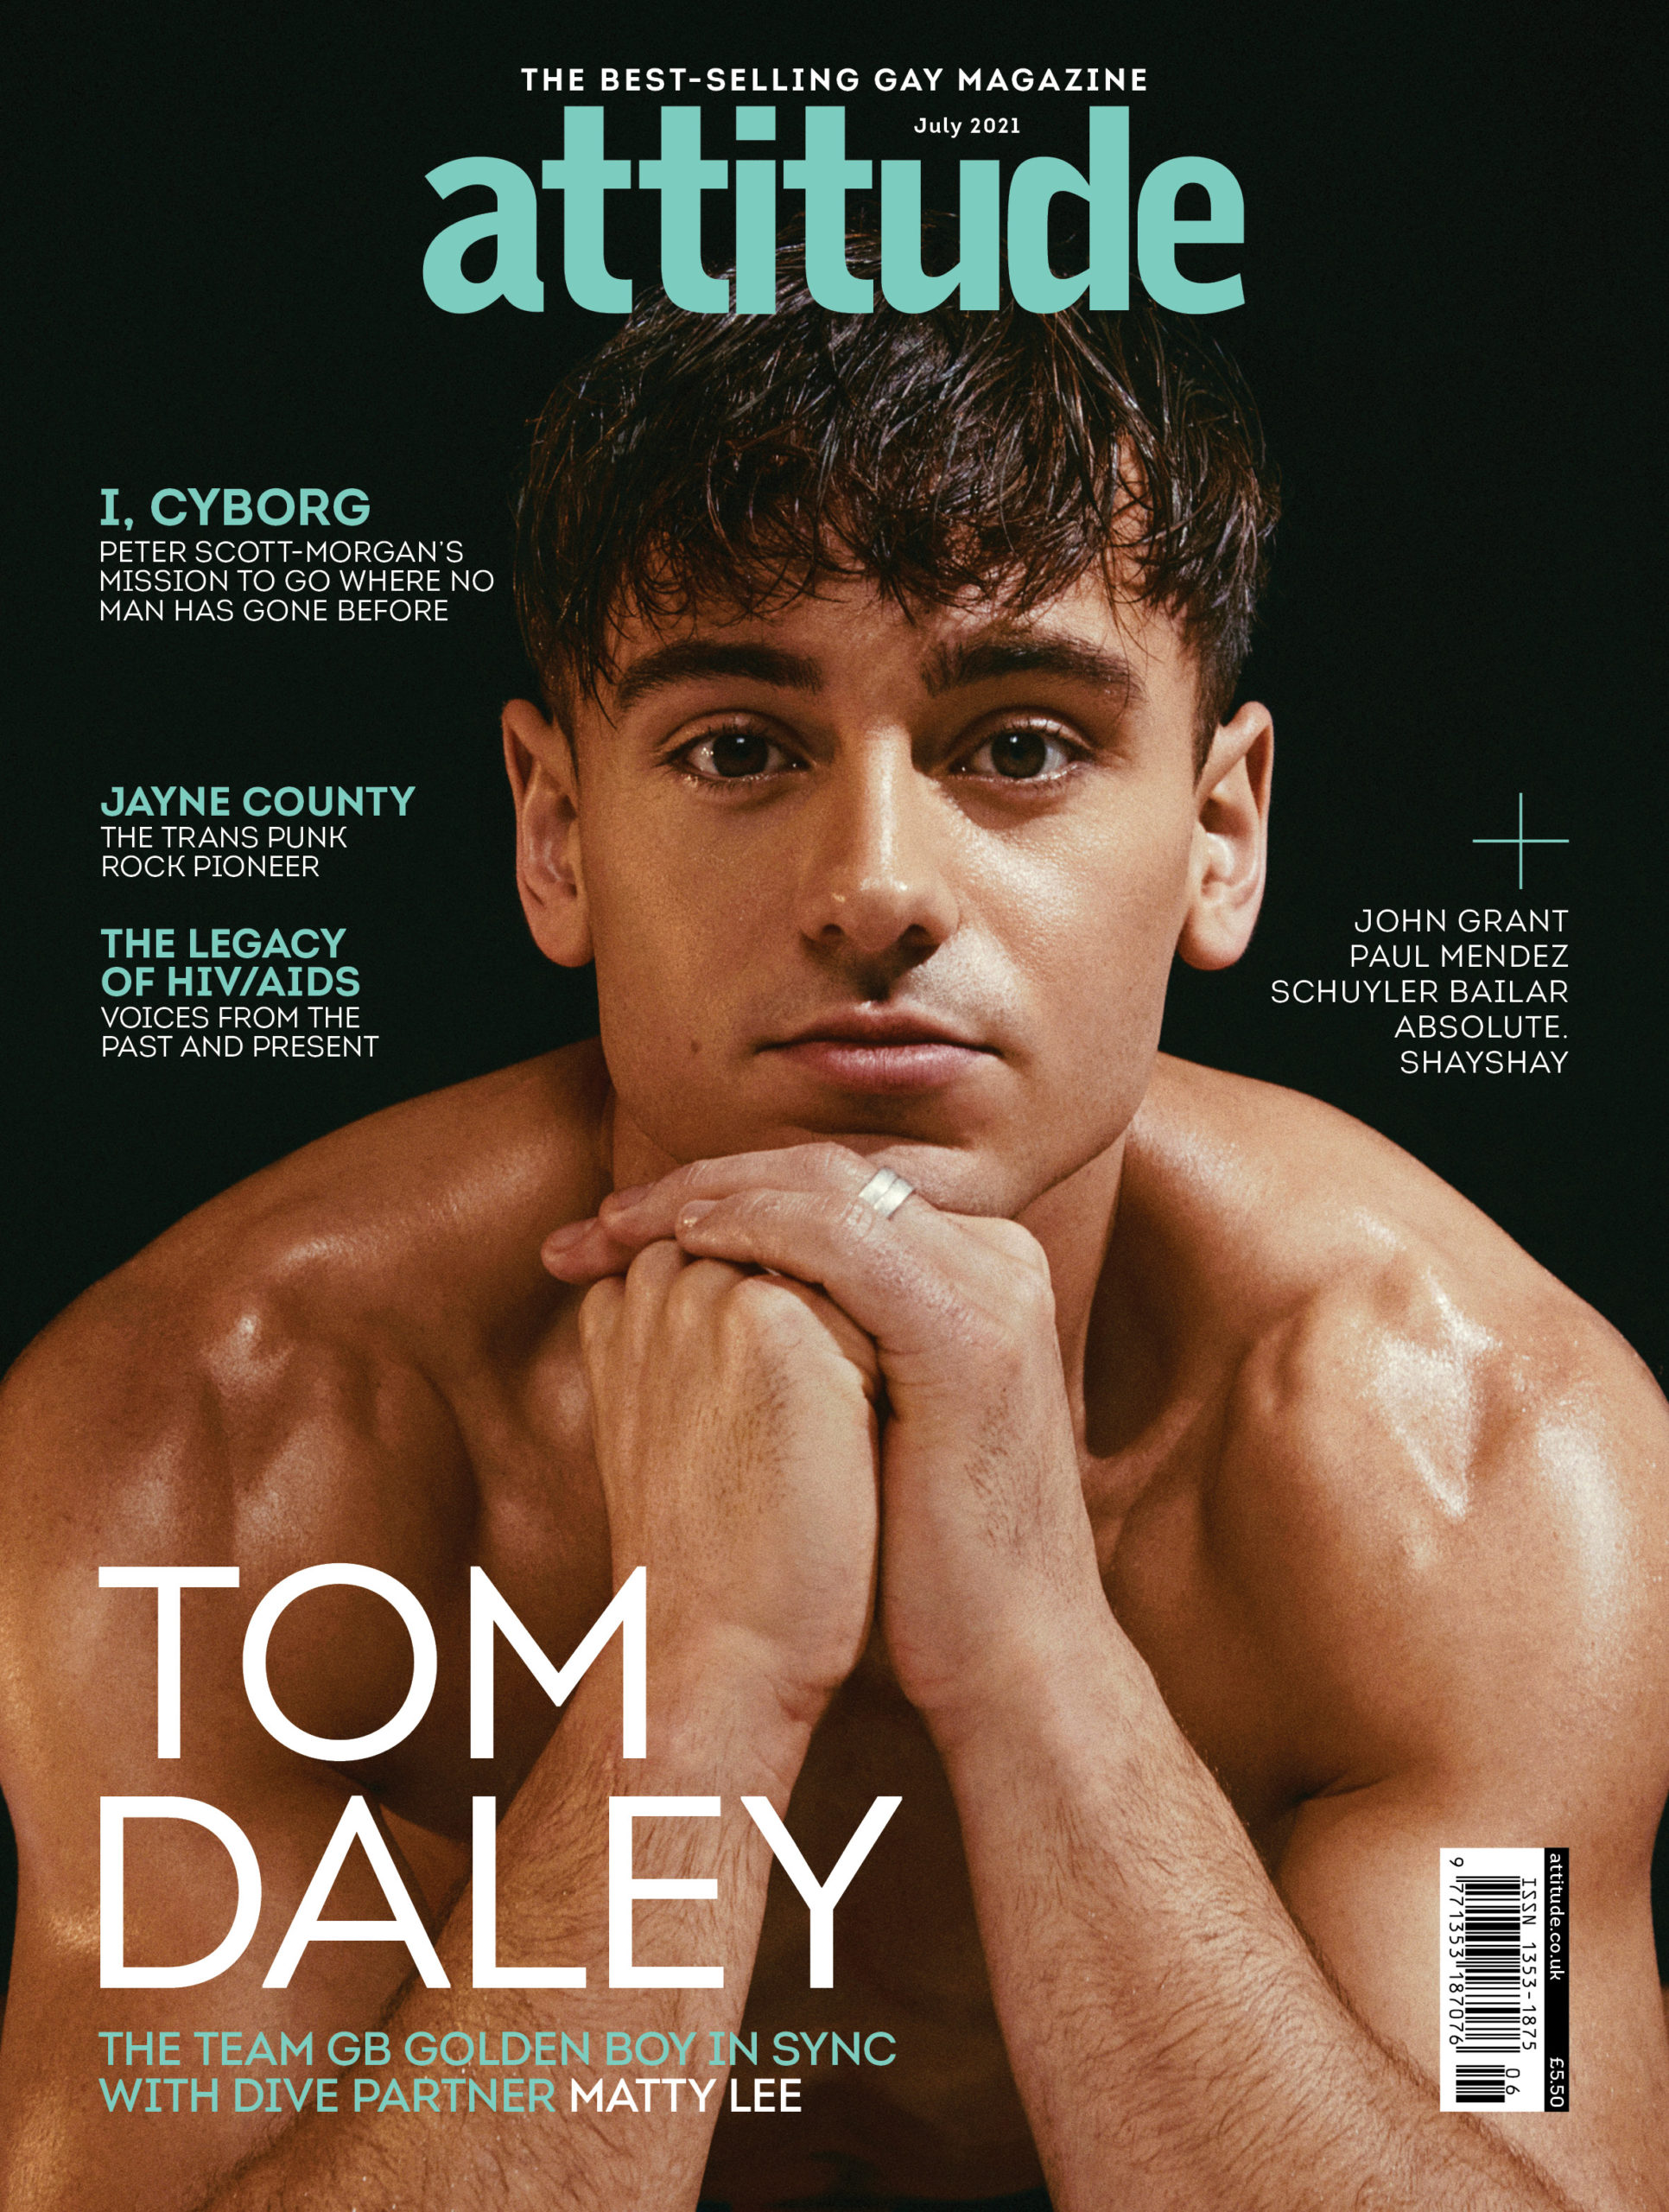 Attitude Magazine cover featuring Tom Daley